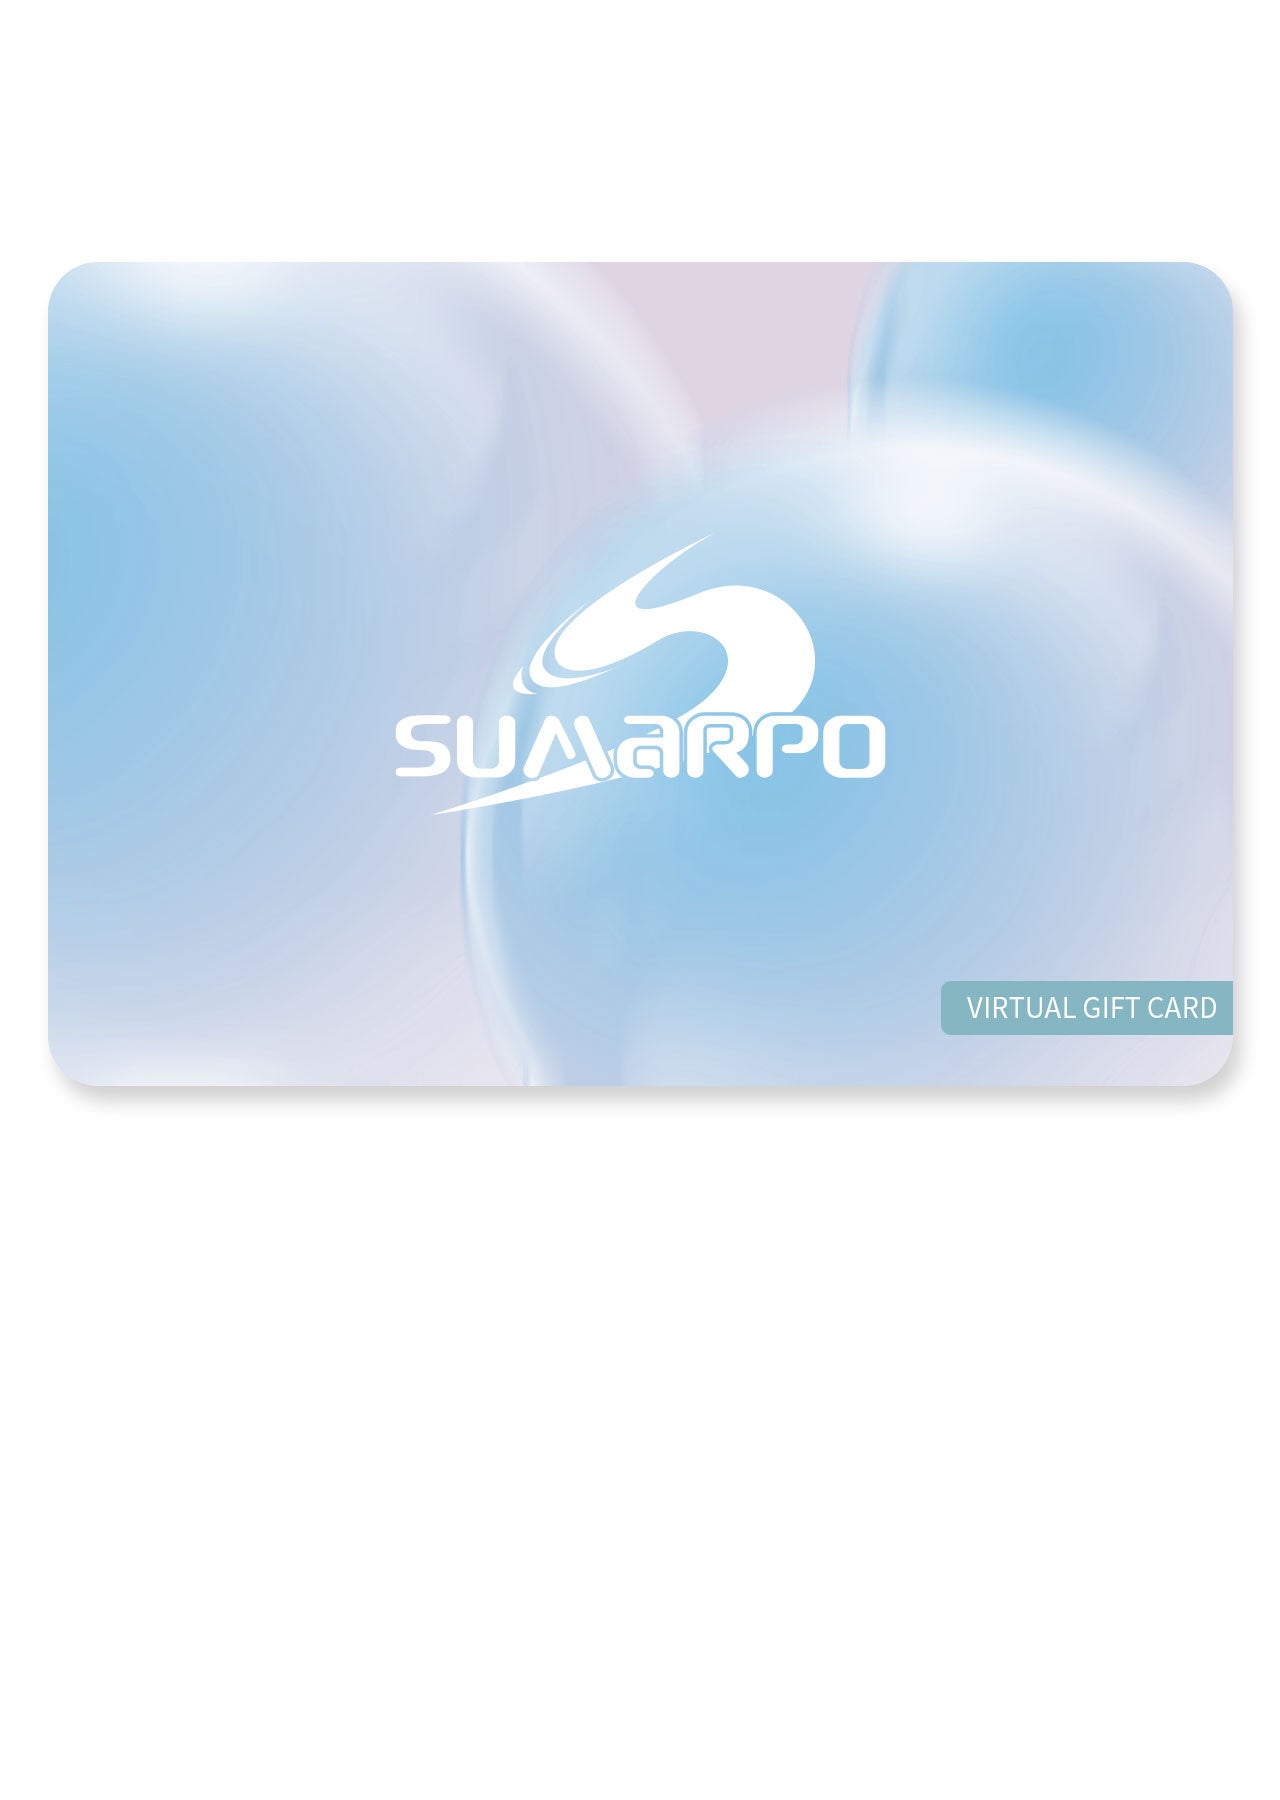 Sumarpo Virtual Gift Card